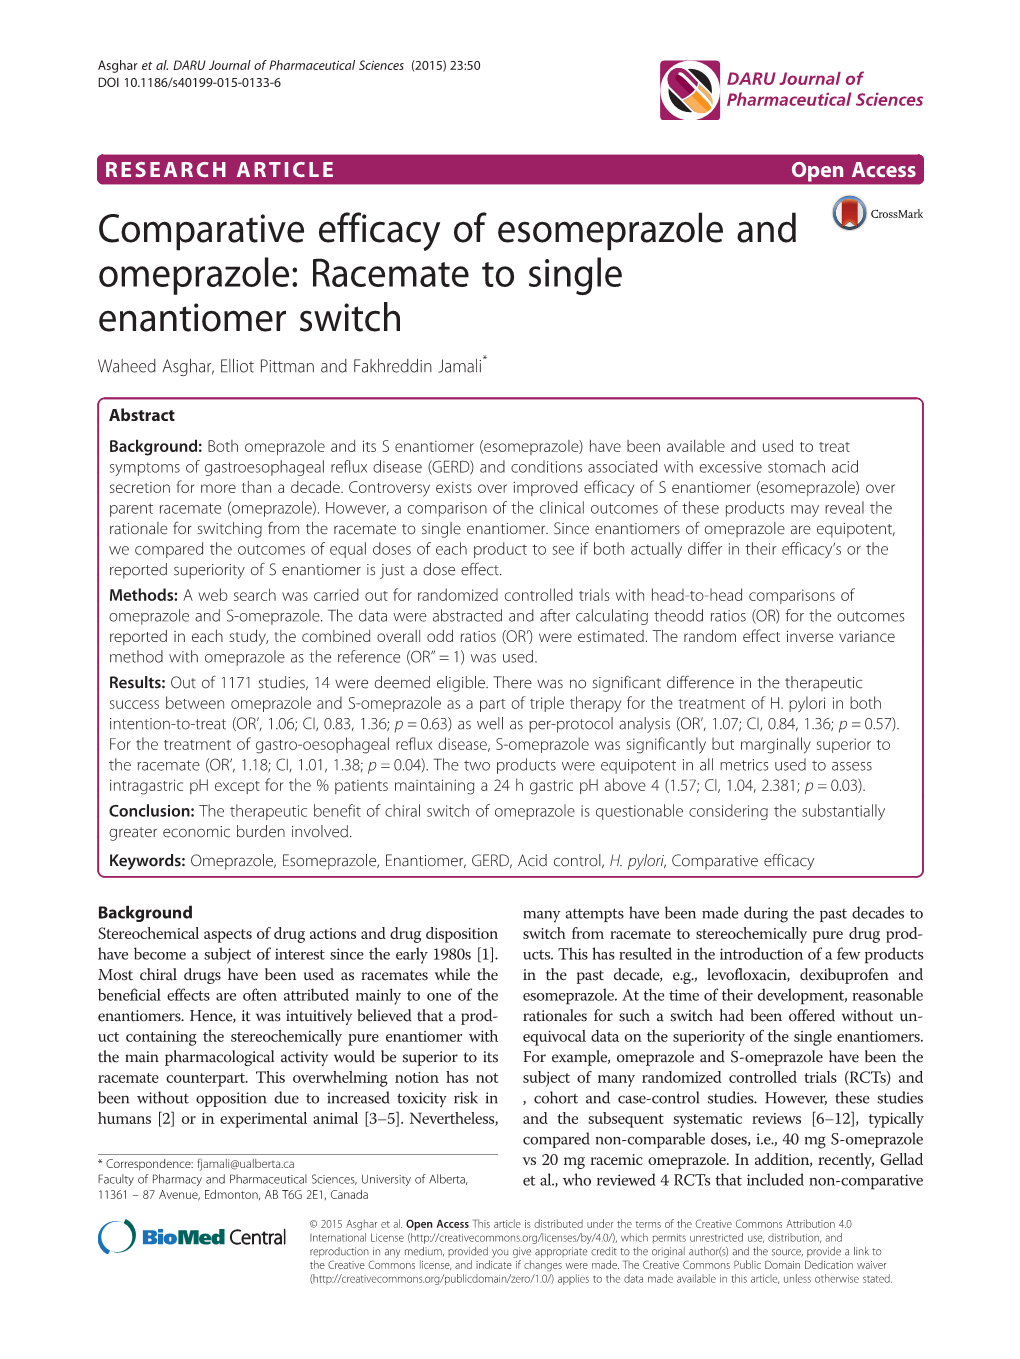 Comparative Efficacy of Esomeprazole and Omeprazole: Racemate to Single Enantiomer Switch Waheed Asghar, Elliot Pittman and Fakhreddin Jamali*